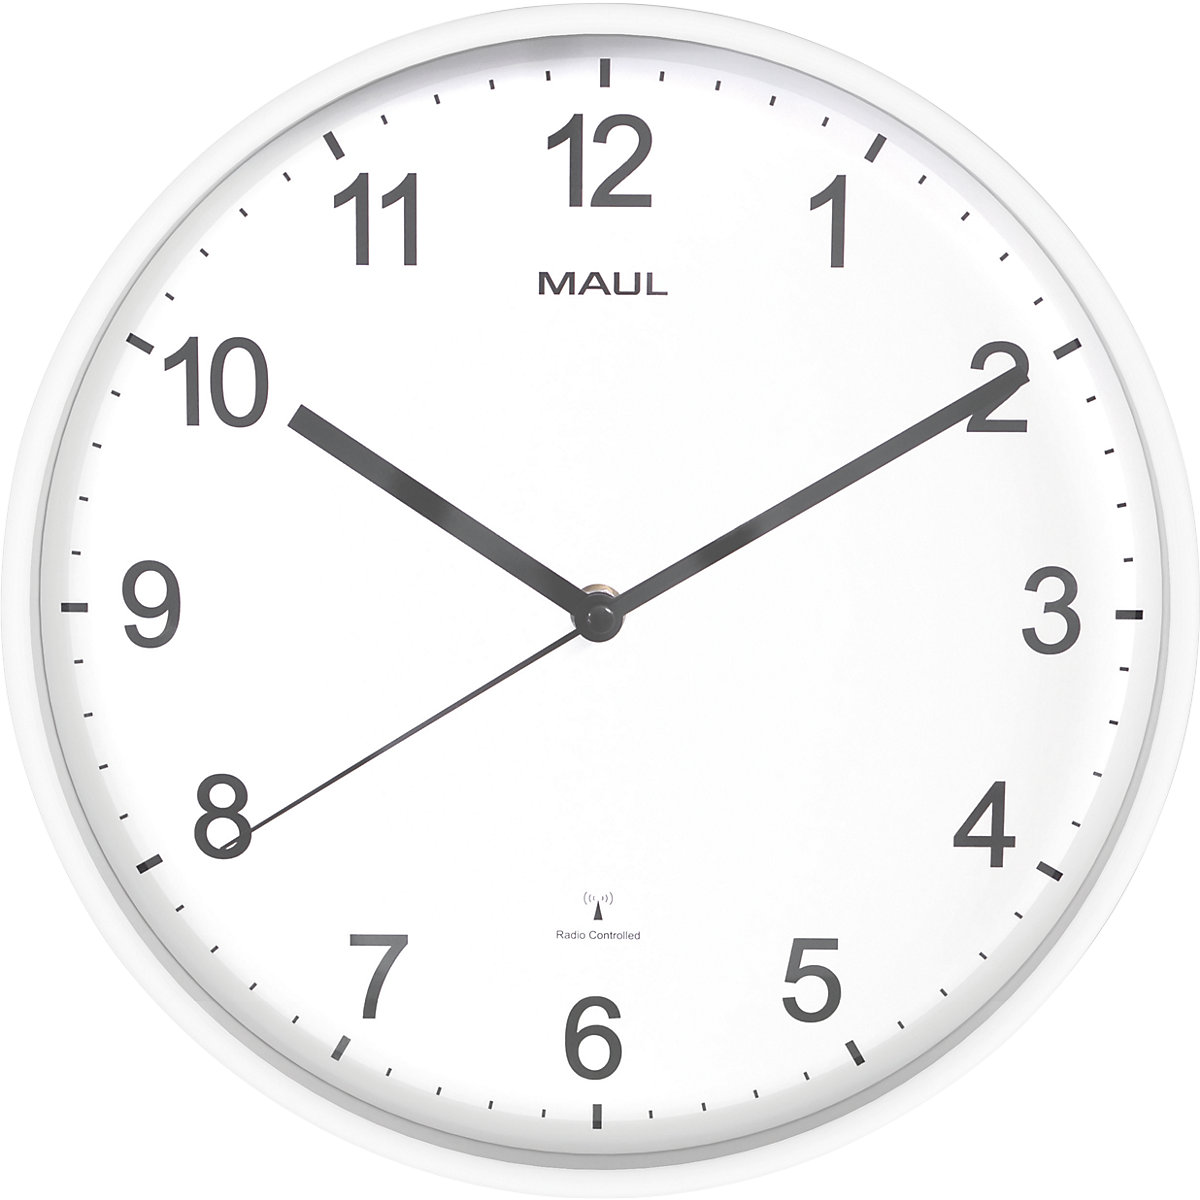 MAULsprint wall clock – MAUL